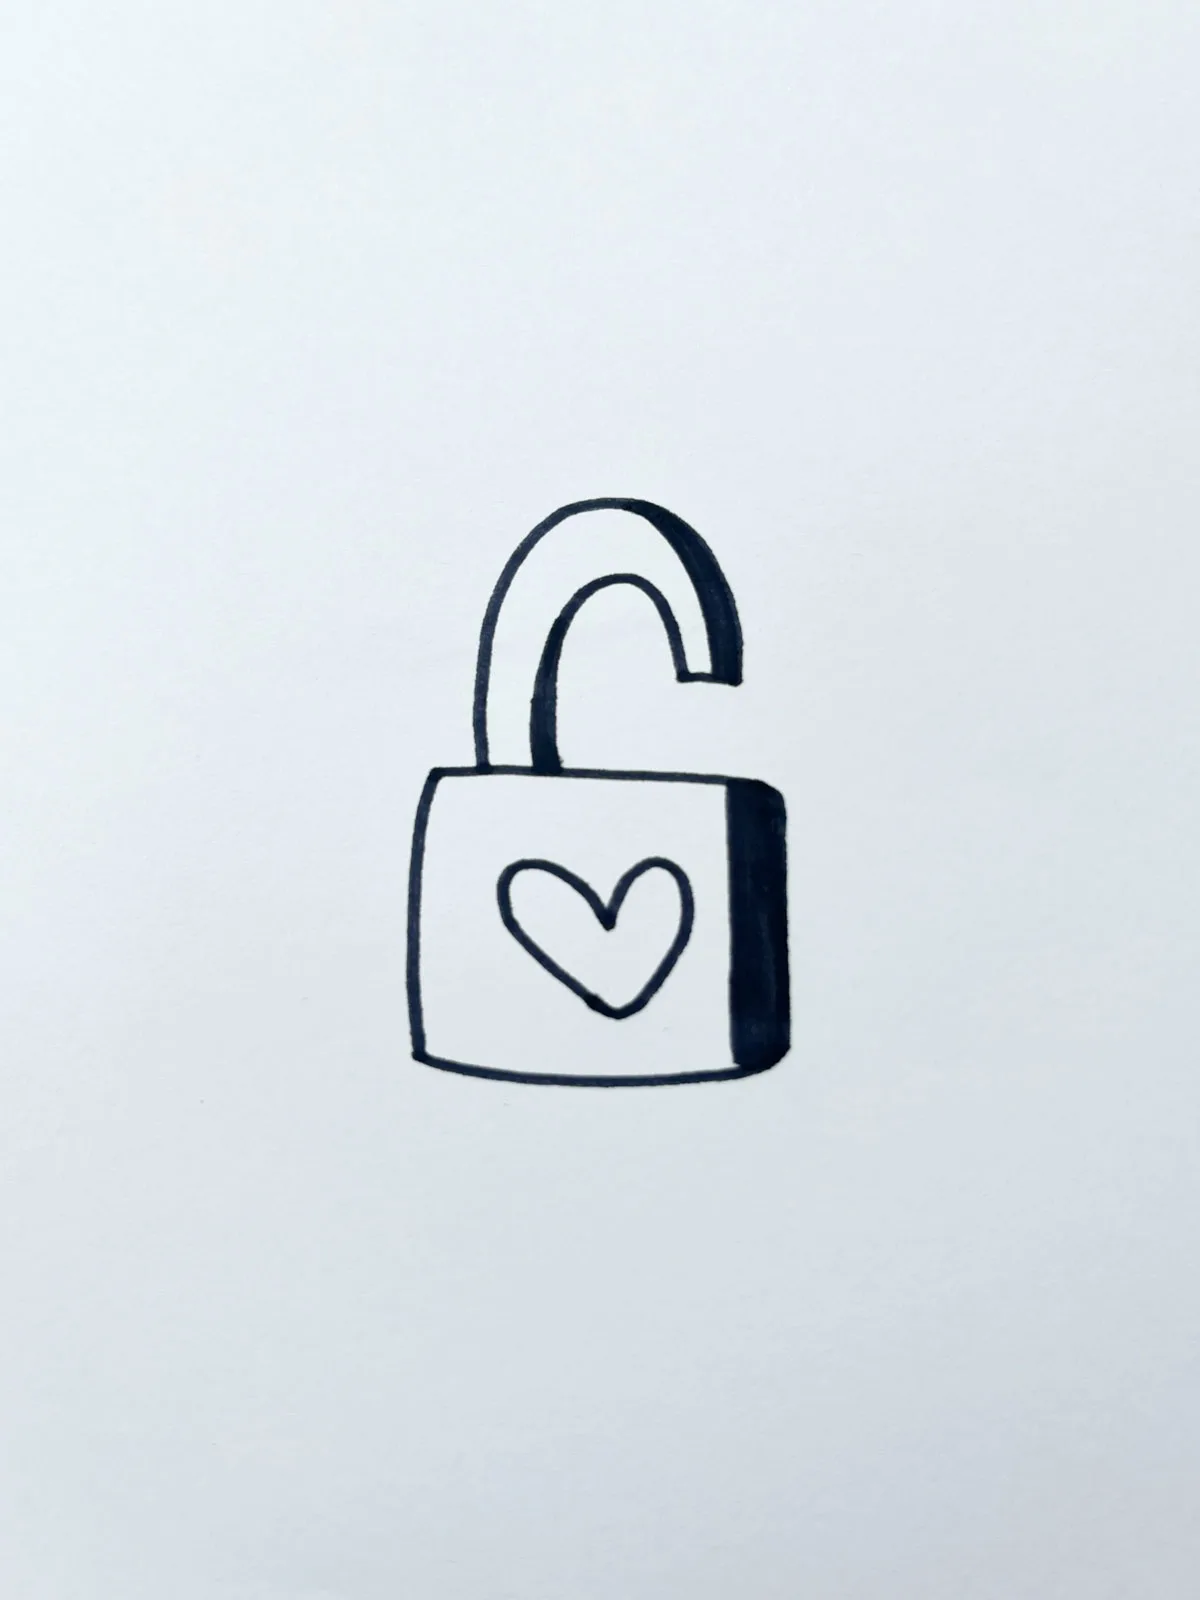 lock of love heart drawing